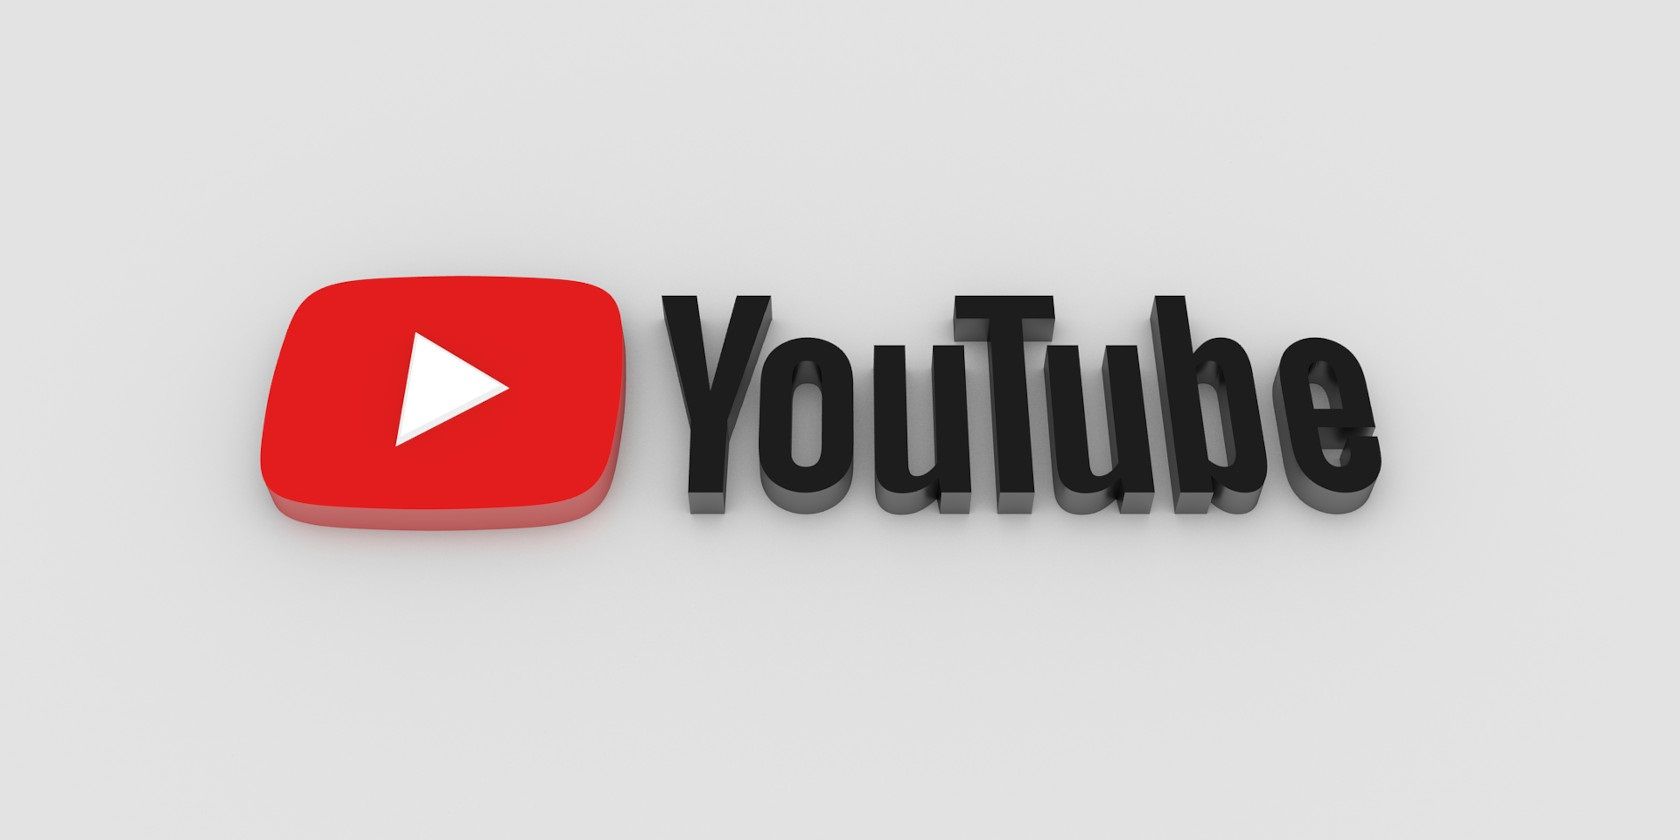 YouTube logo against a white background